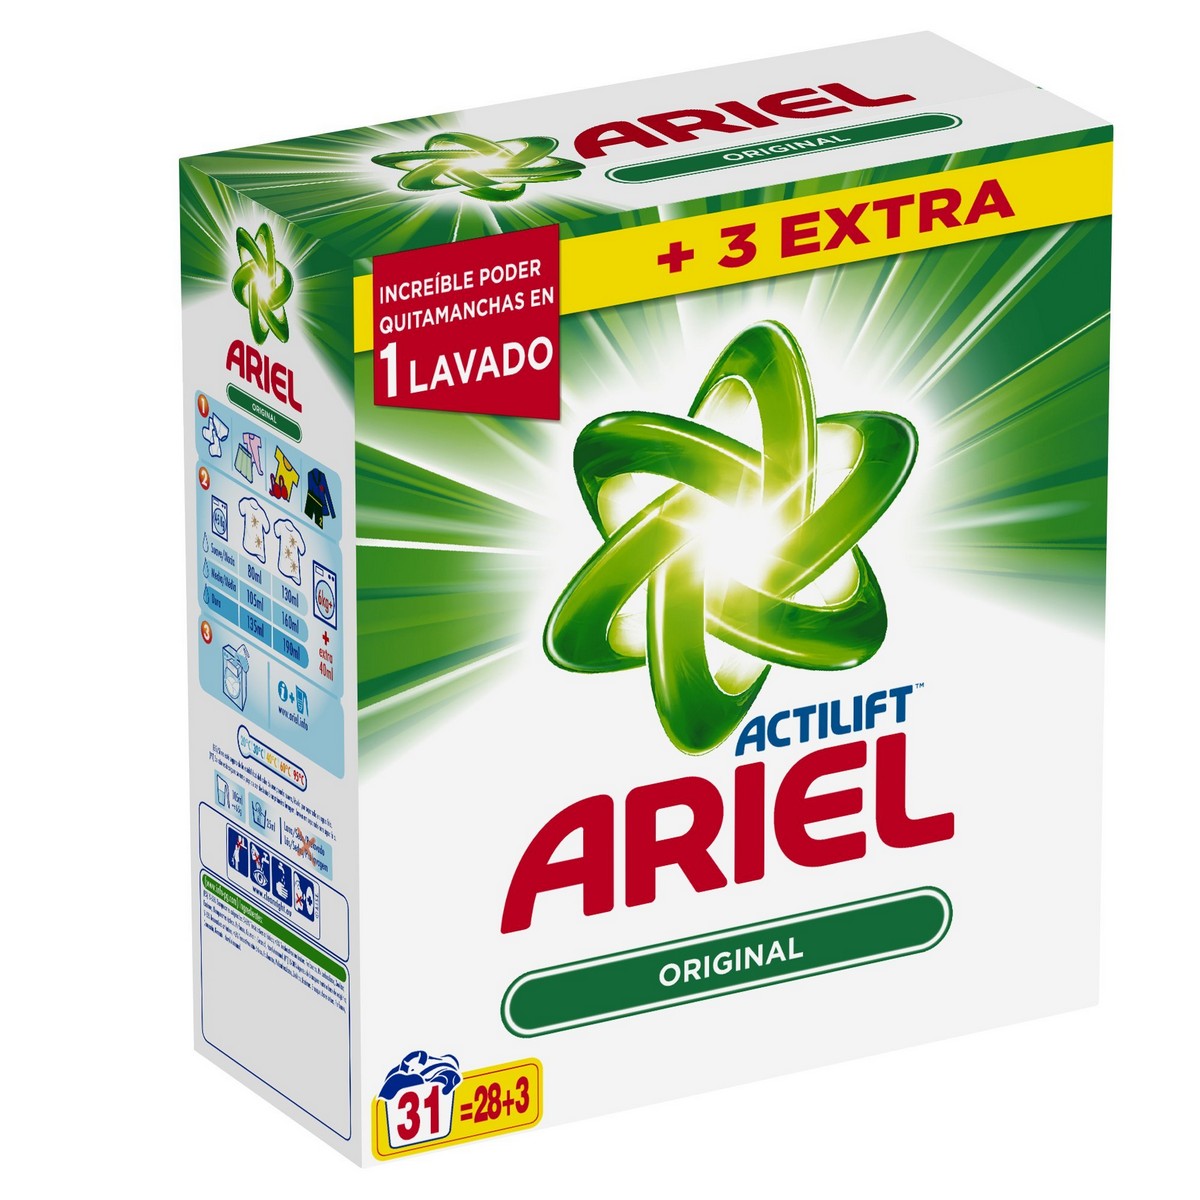 Detergent Ariel Actilift Original 2015 G v prahu 31 pranj